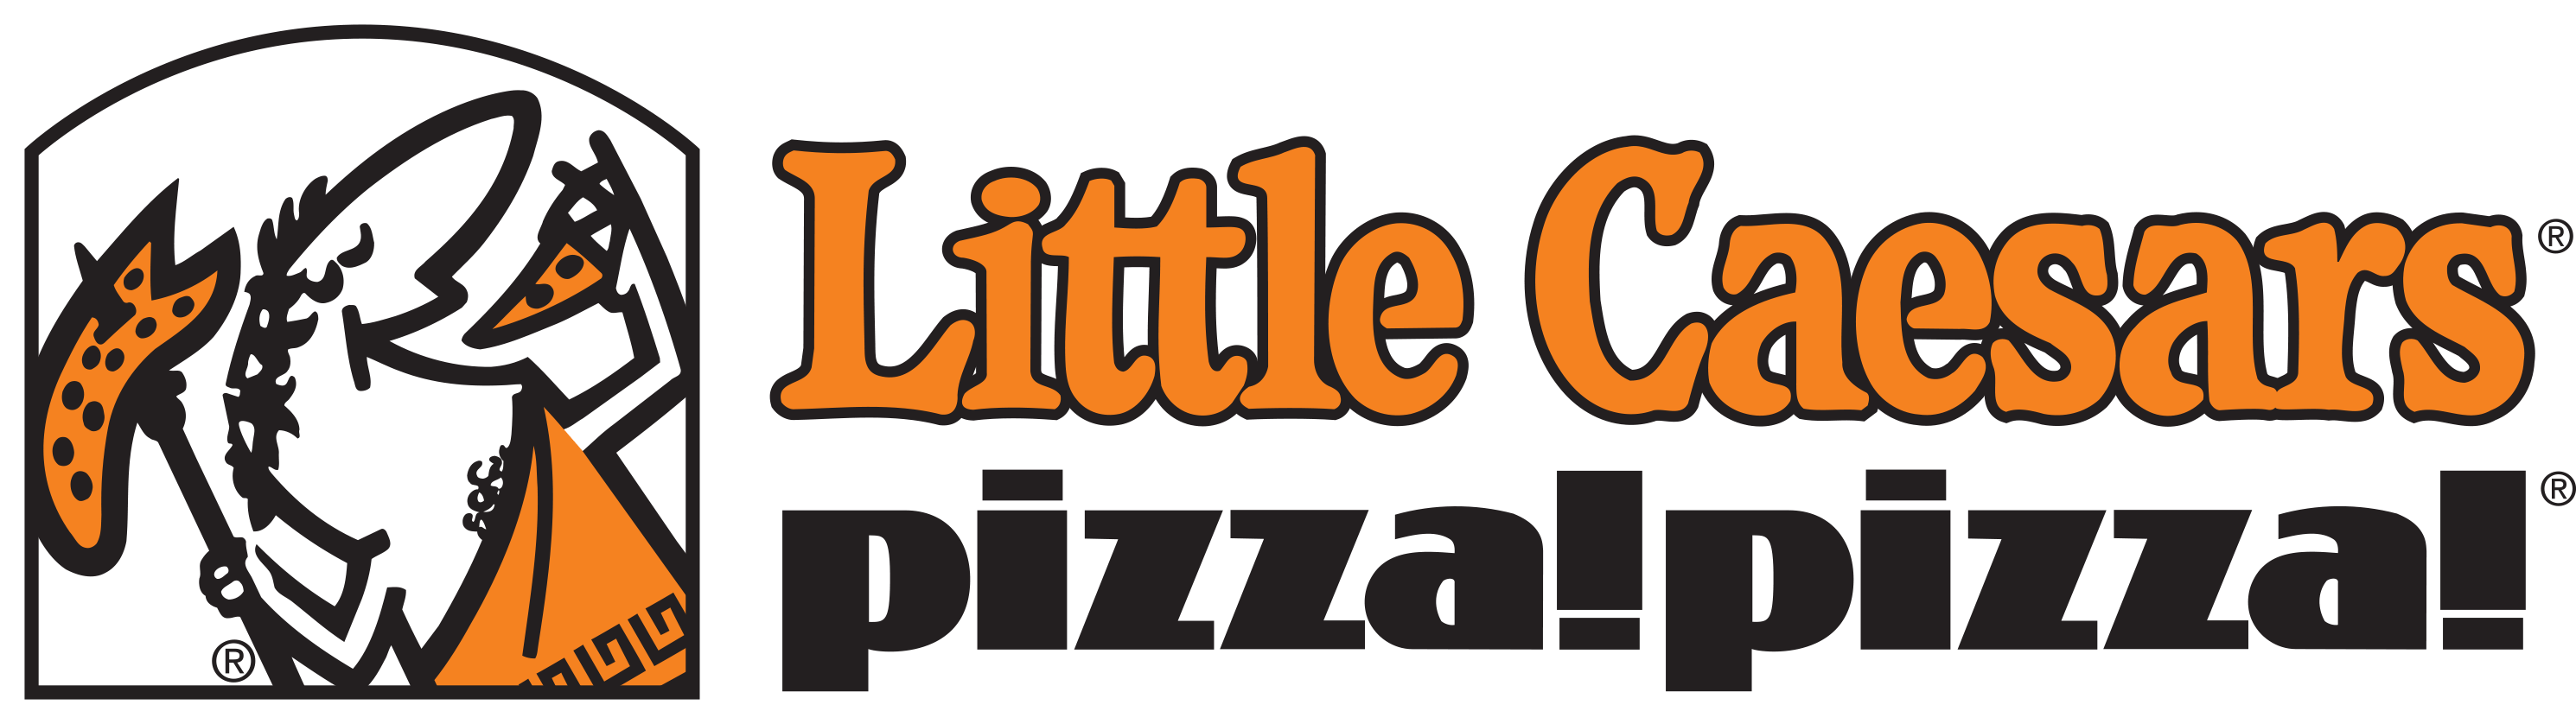 Food Little Caesars Logo - Food Services Manager Little Caesars